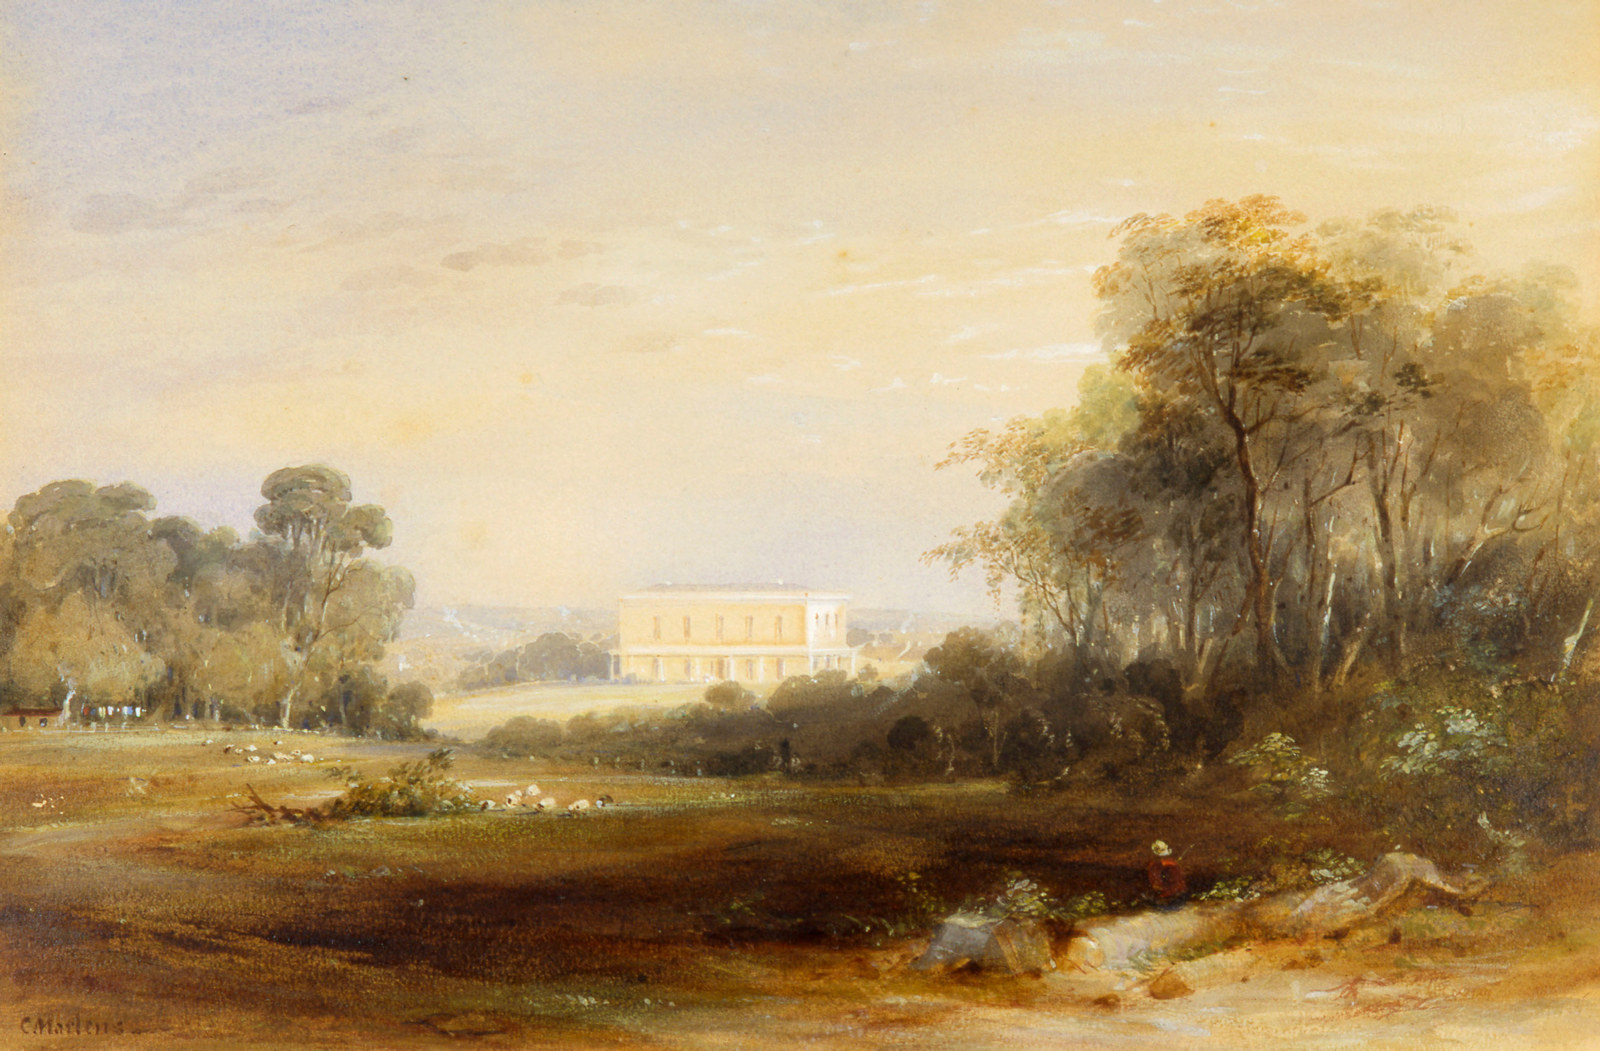 [The house at Vineyard, Parramatta] 1856